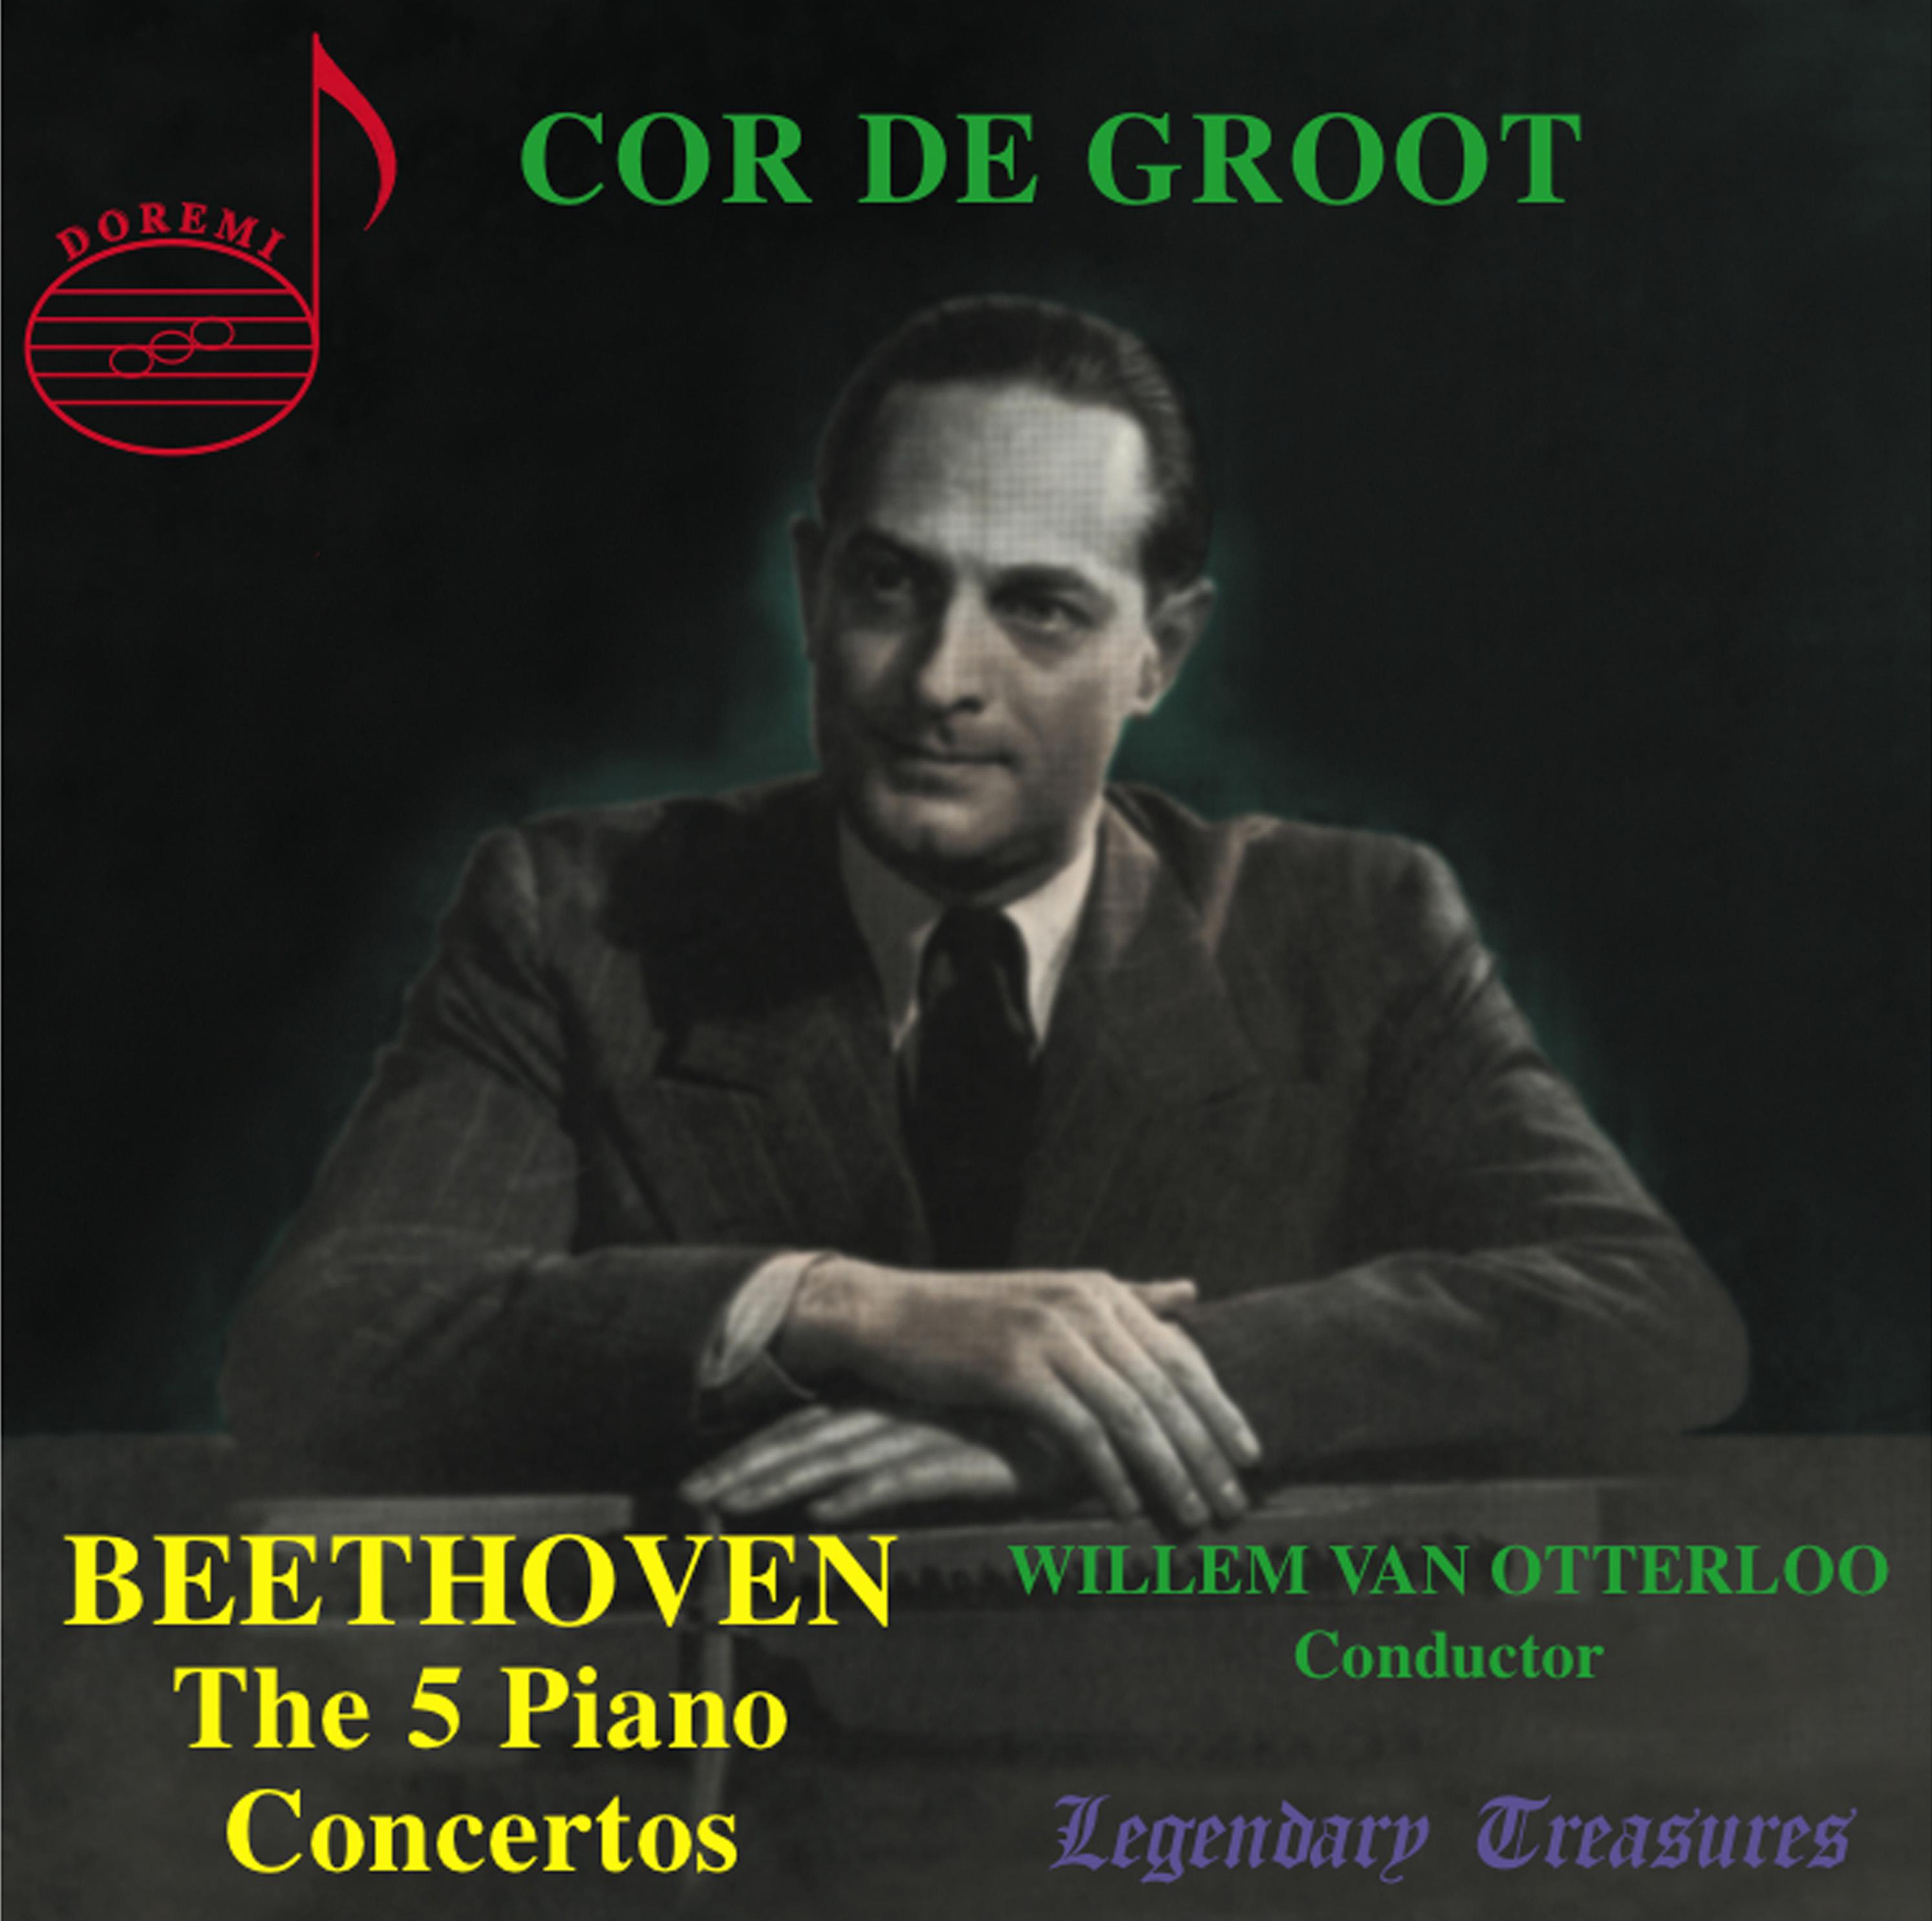 Cor de Groot - Piano Concerto No. 5 in E-Flat Major, Op. 73 